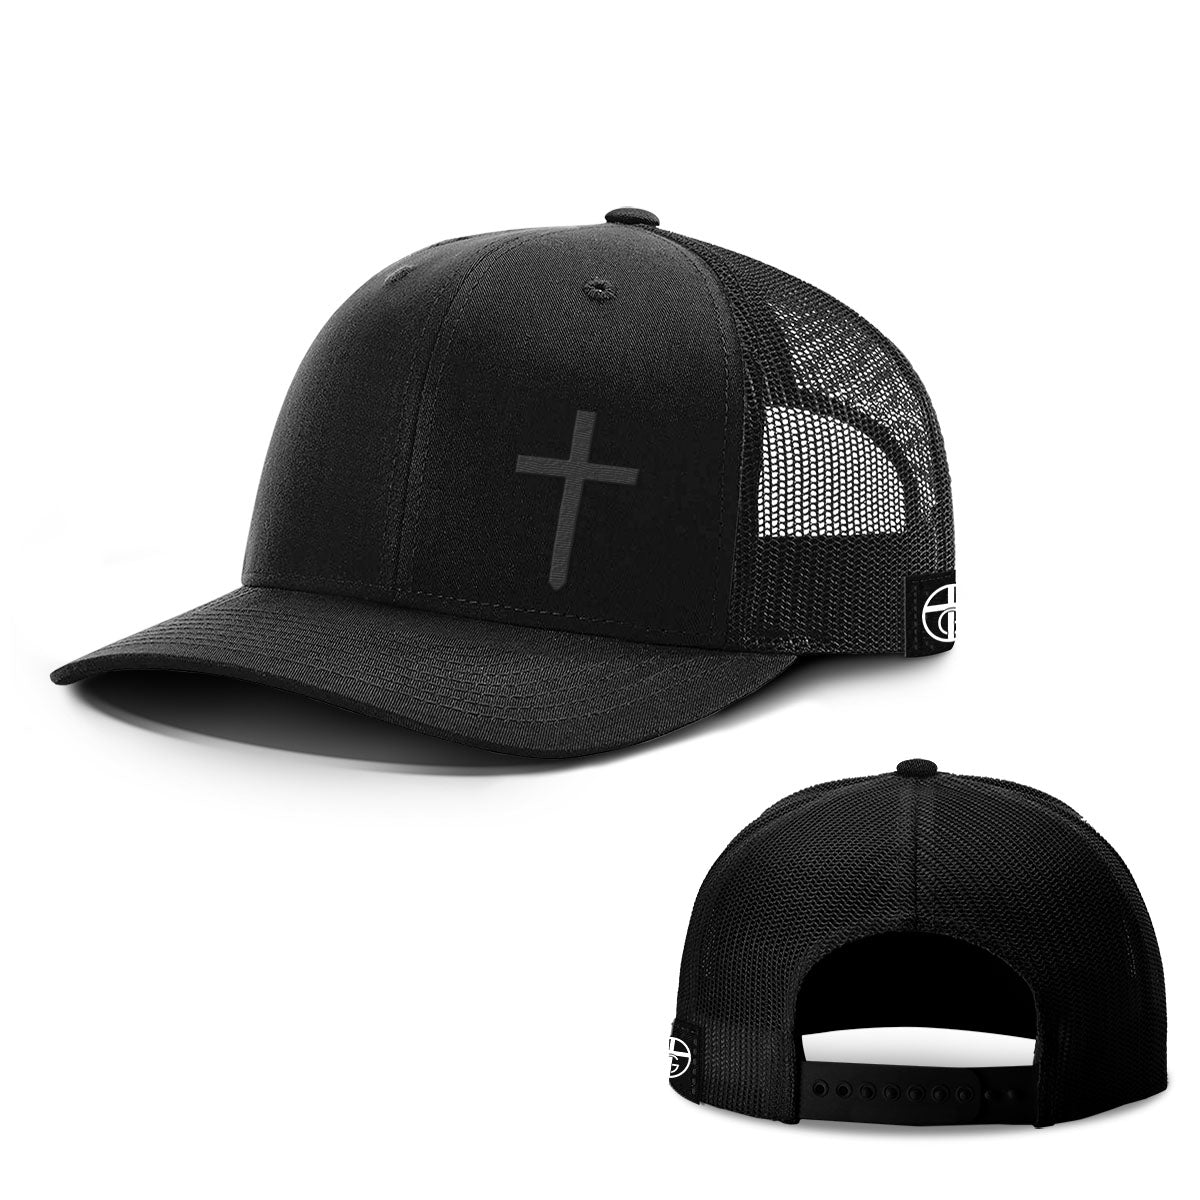 Cross Lower Left Blackout Version Hats